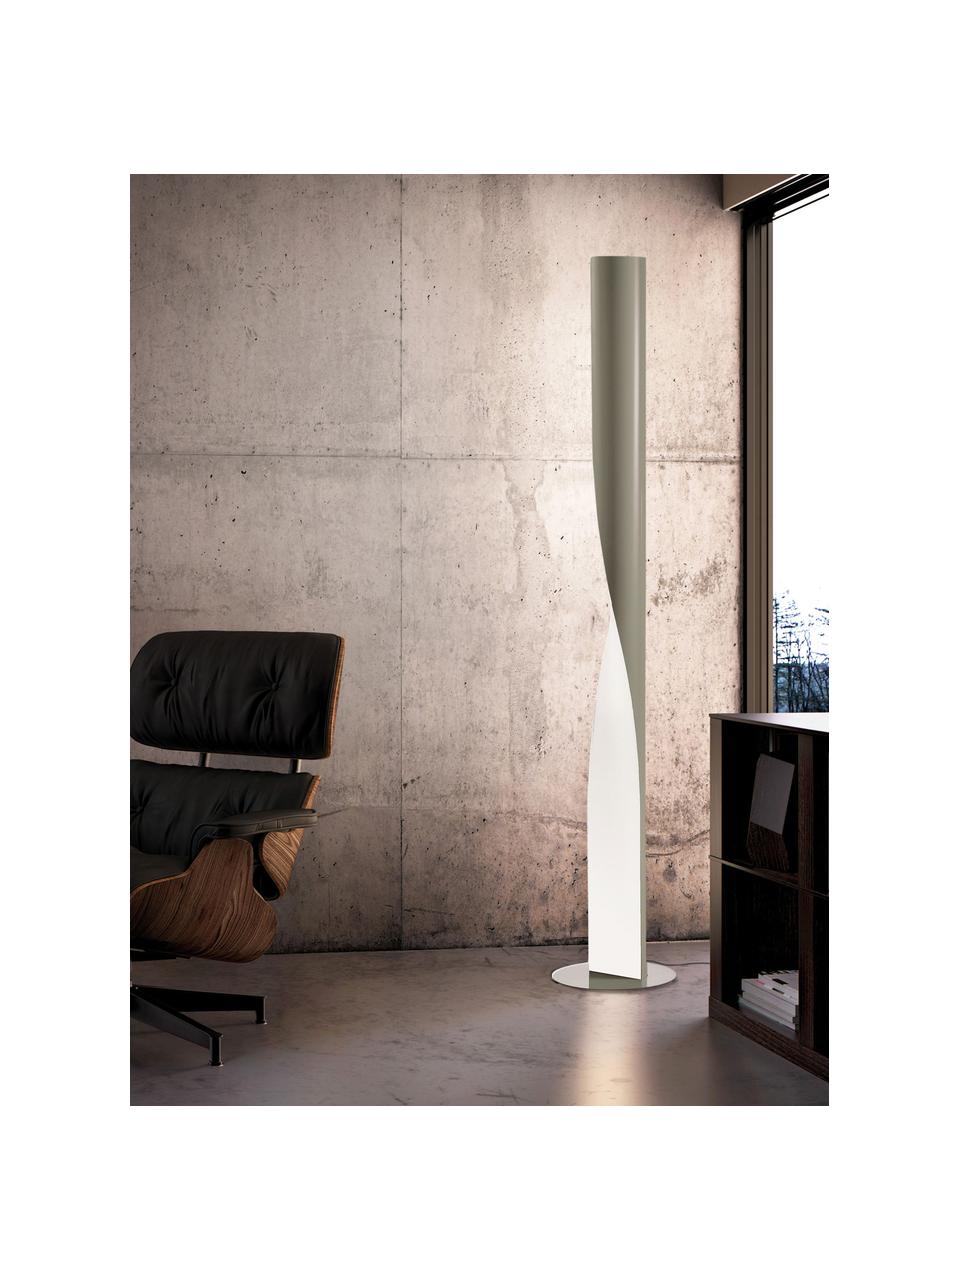 Lámpara de pie grande regulable Evita, Estructura: tecnopolímero, metal recu, Cable: plástico, Greige, Al 190 cm